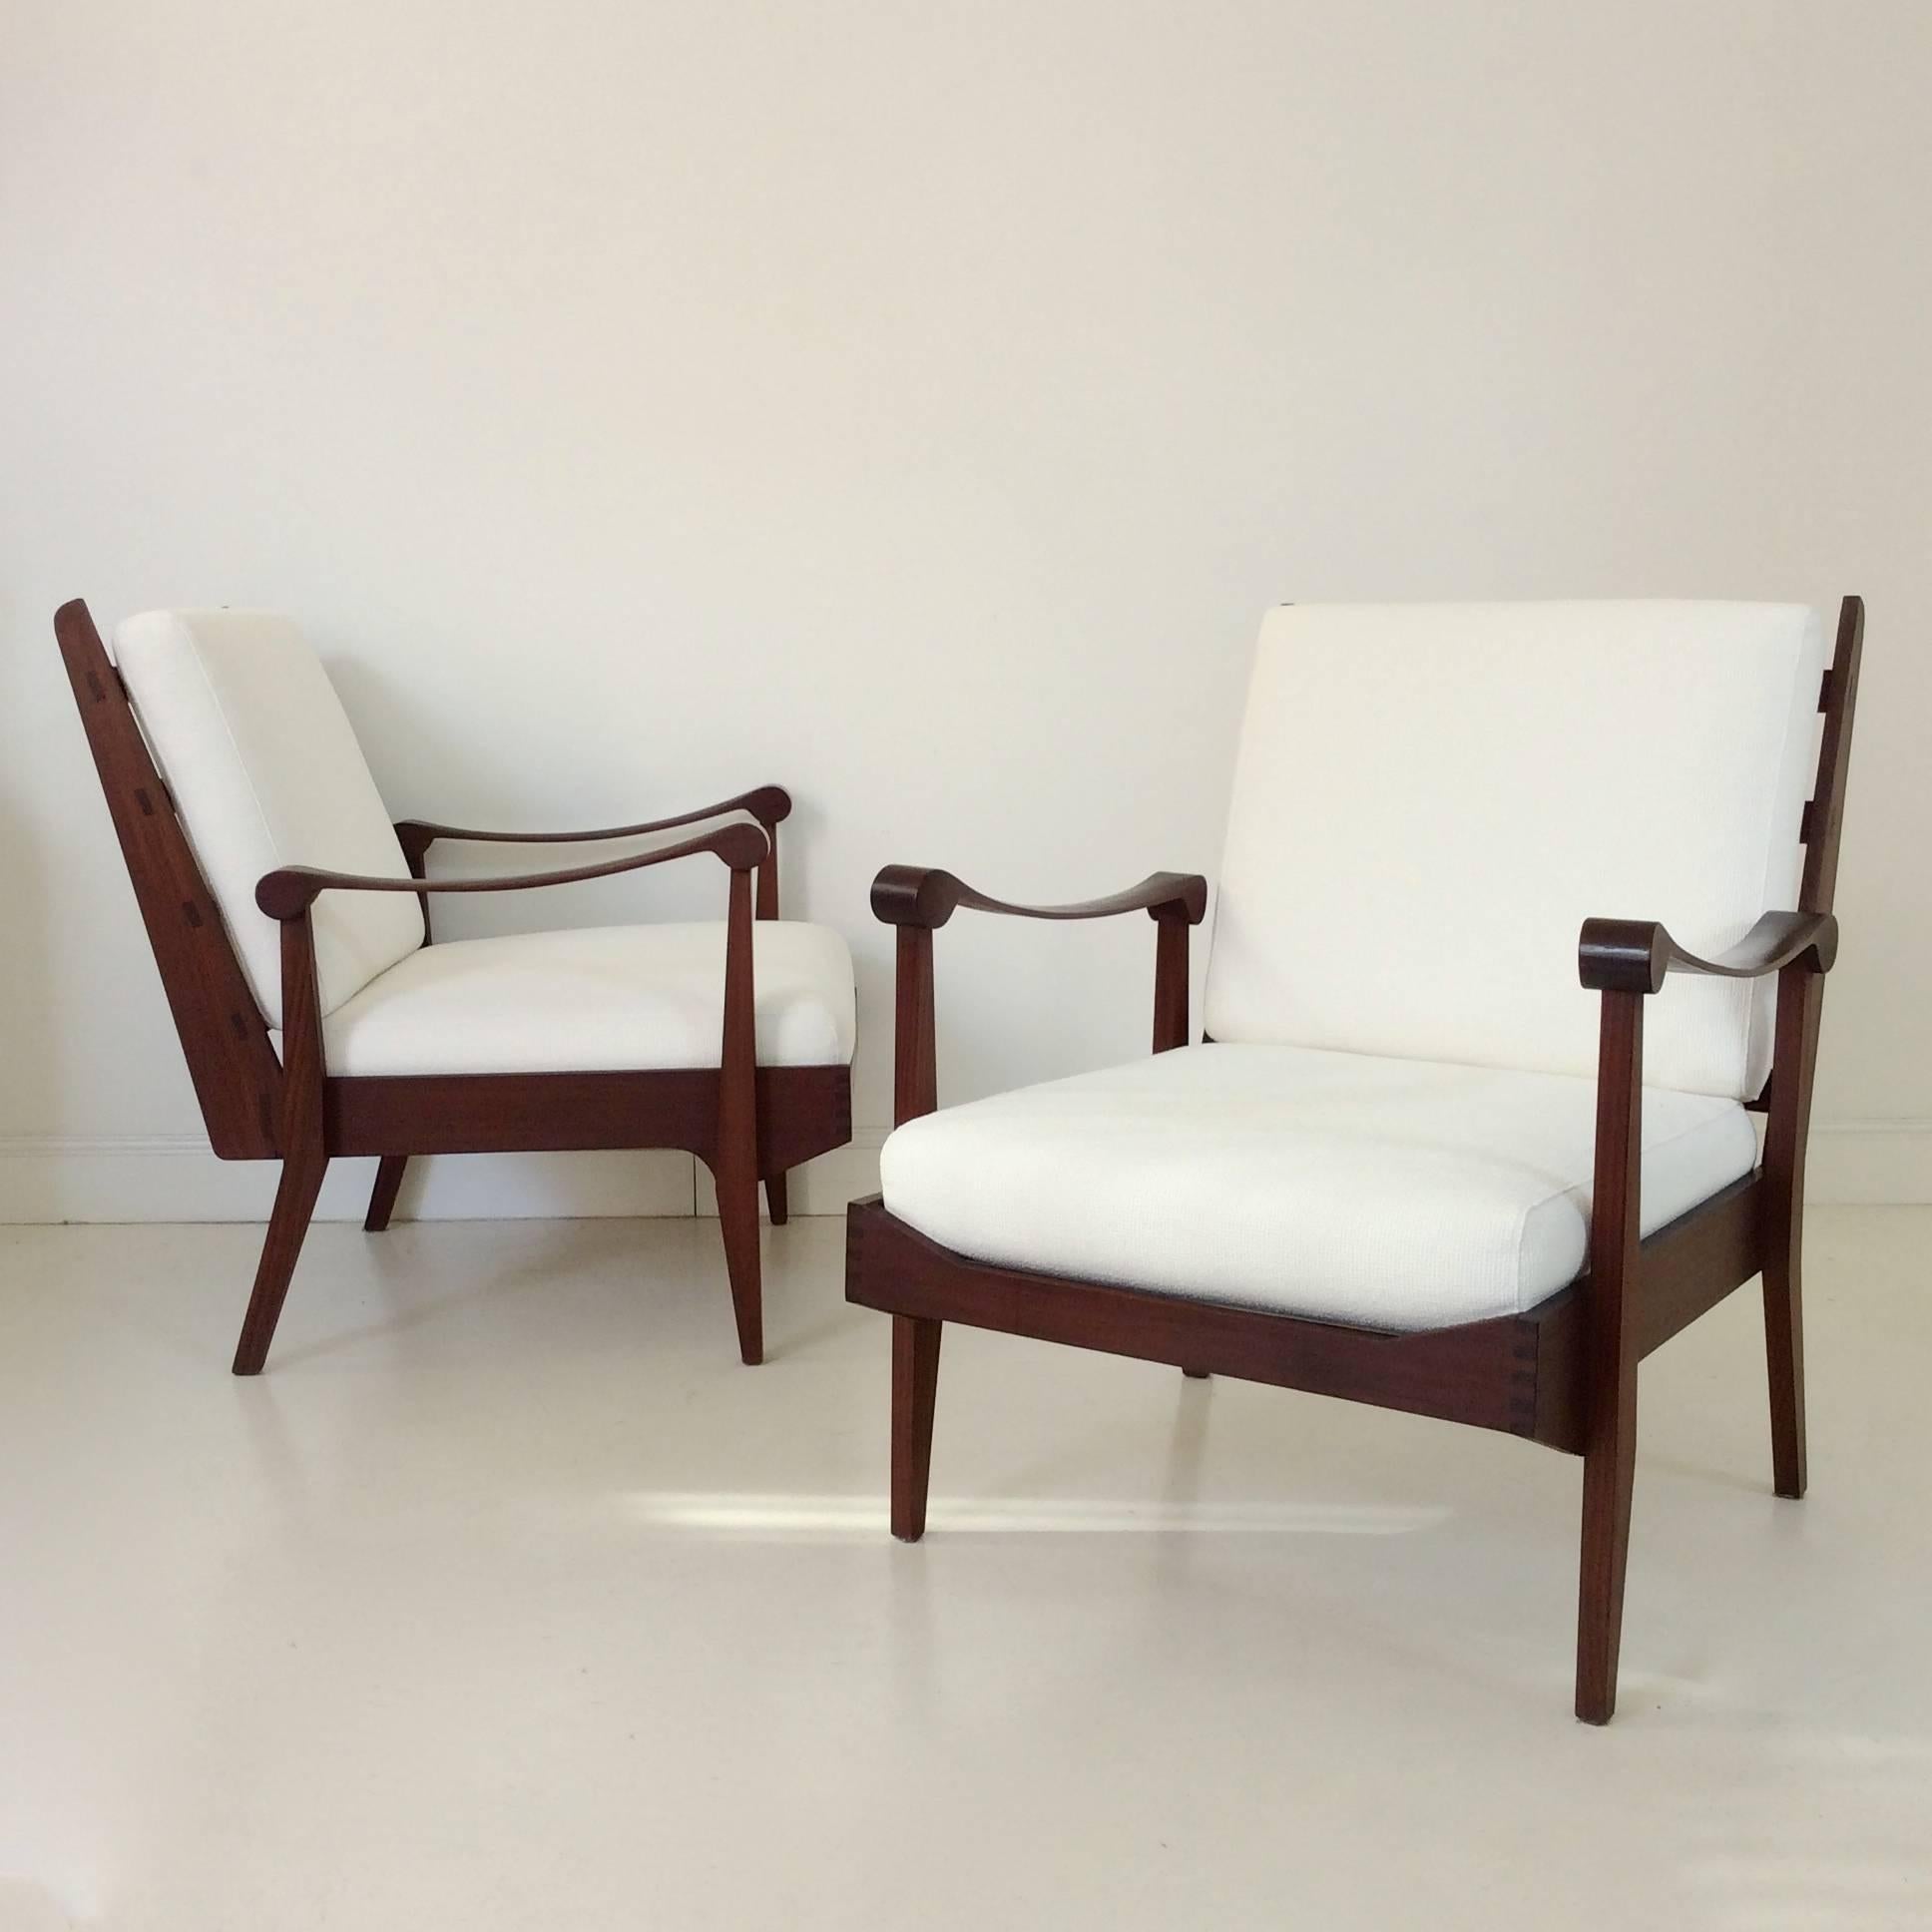 Elegant pair of armchairs, circa 1960, Italy.
Dark wood, new white fabric.
Dimensions: 85 cm H, 68 cm W, 70 cm D, seat H: 43 cm.
Good condition.
 